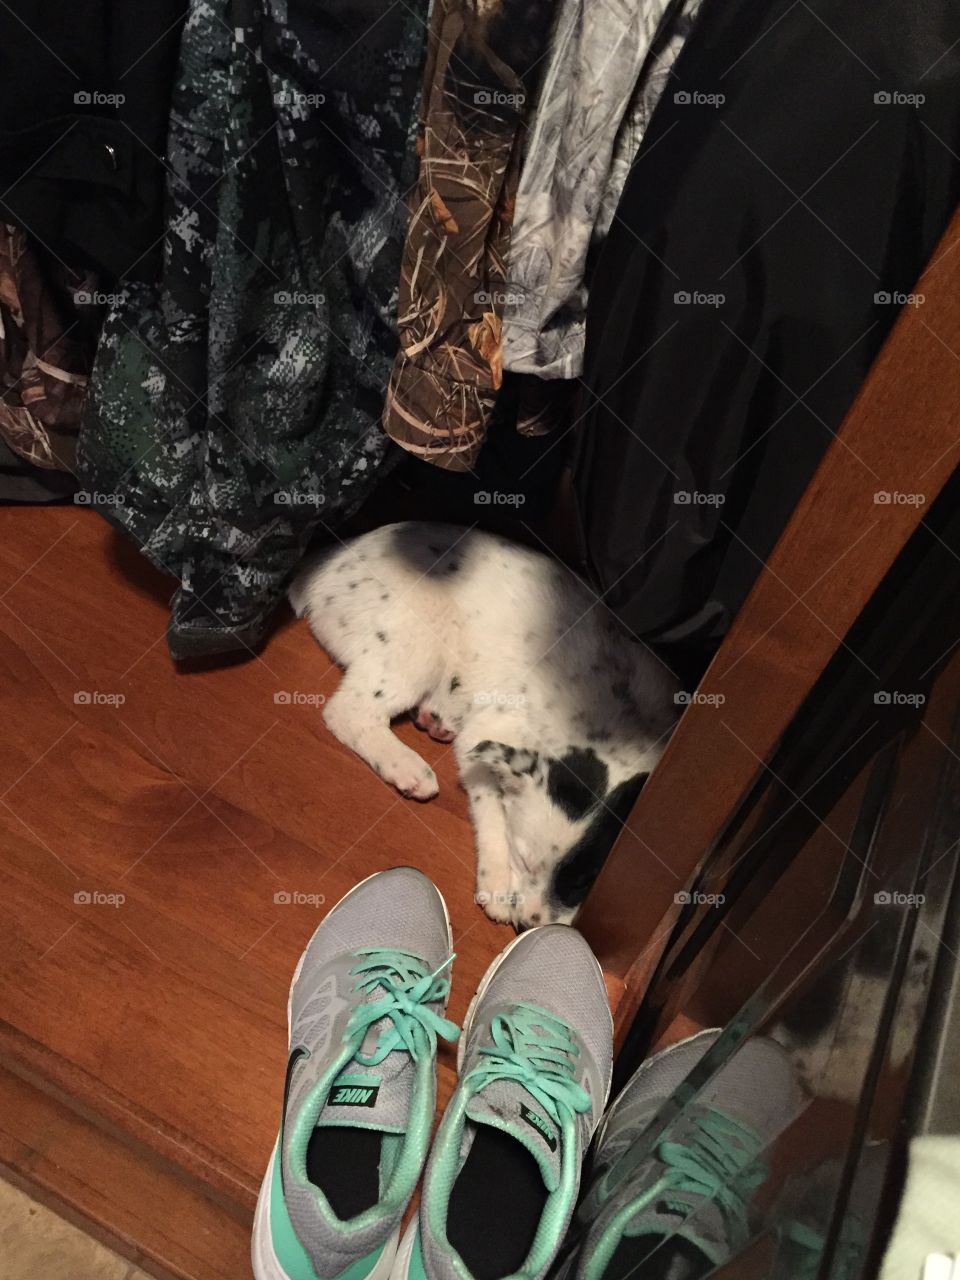 Tired pup falls asleep in a closet